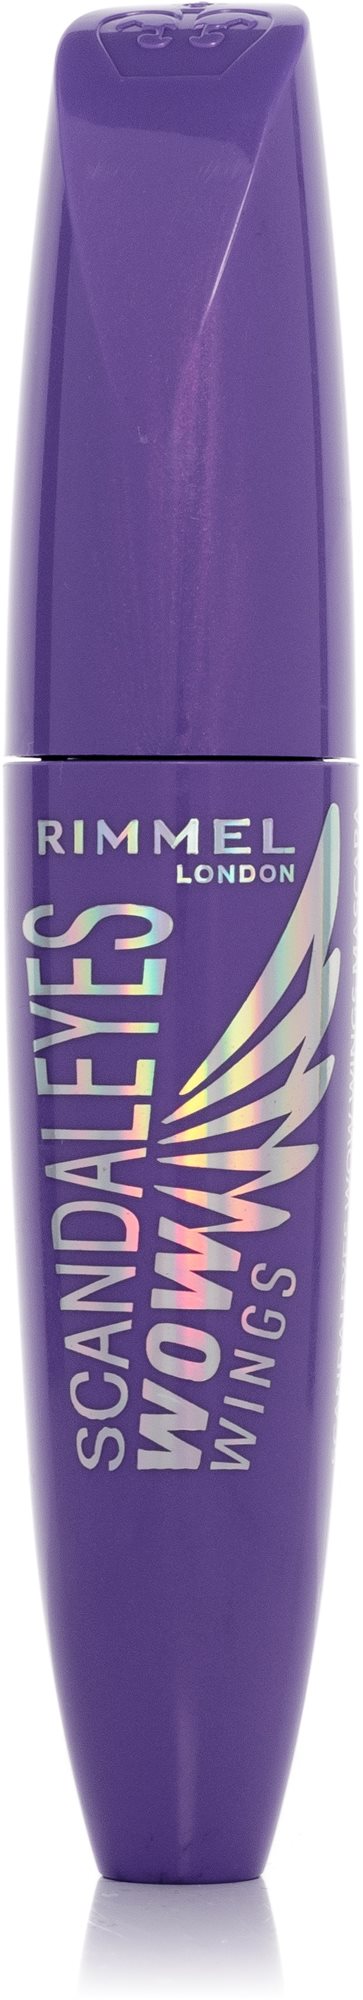 RIMMEL LONDON Scandaleyes WOW Wings Mascara 001 Black (12 ml)